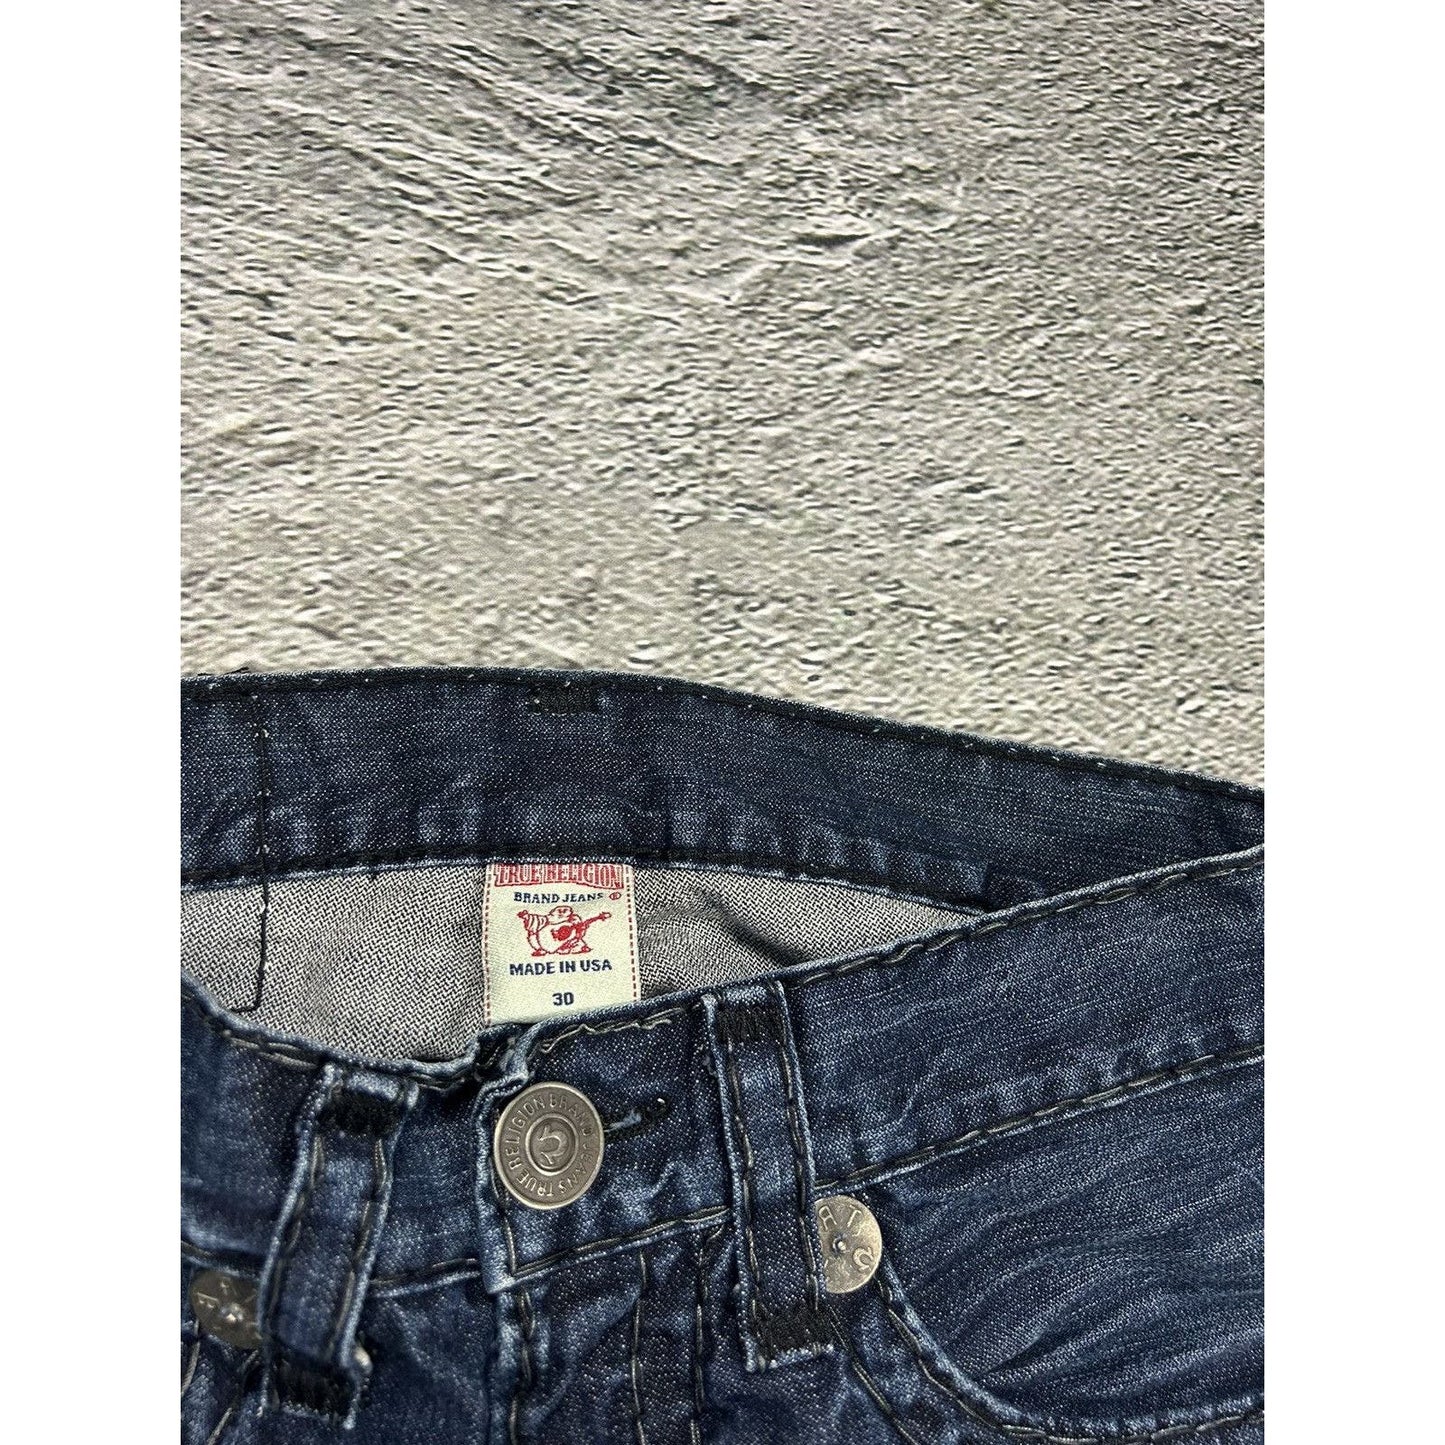 True Religion vintage jeans navy black thick stitching Y2K